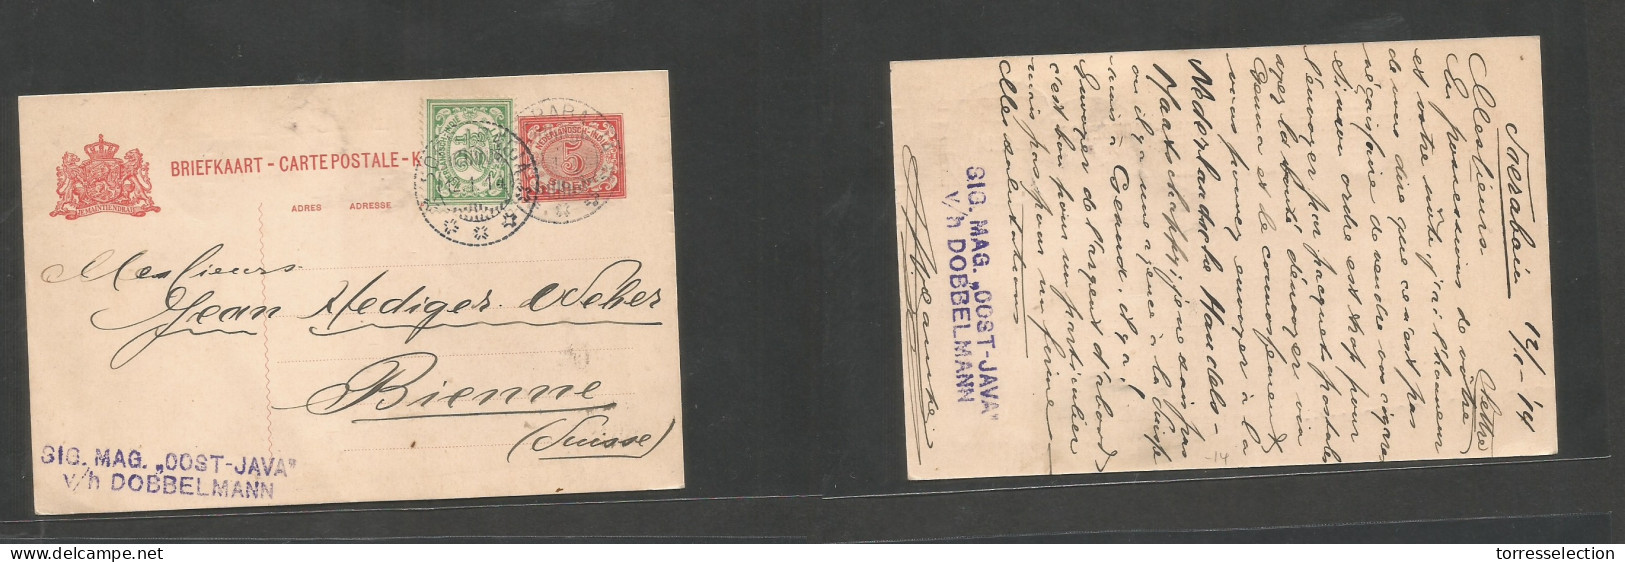 DUTCH INDIES. 1914 (12 Apr) Soerabaja - Switzerland, Bienne 5c Red Stat Card + 2 1/2c Green Adtl, Cds. Fine Used. - Netherlands Indies